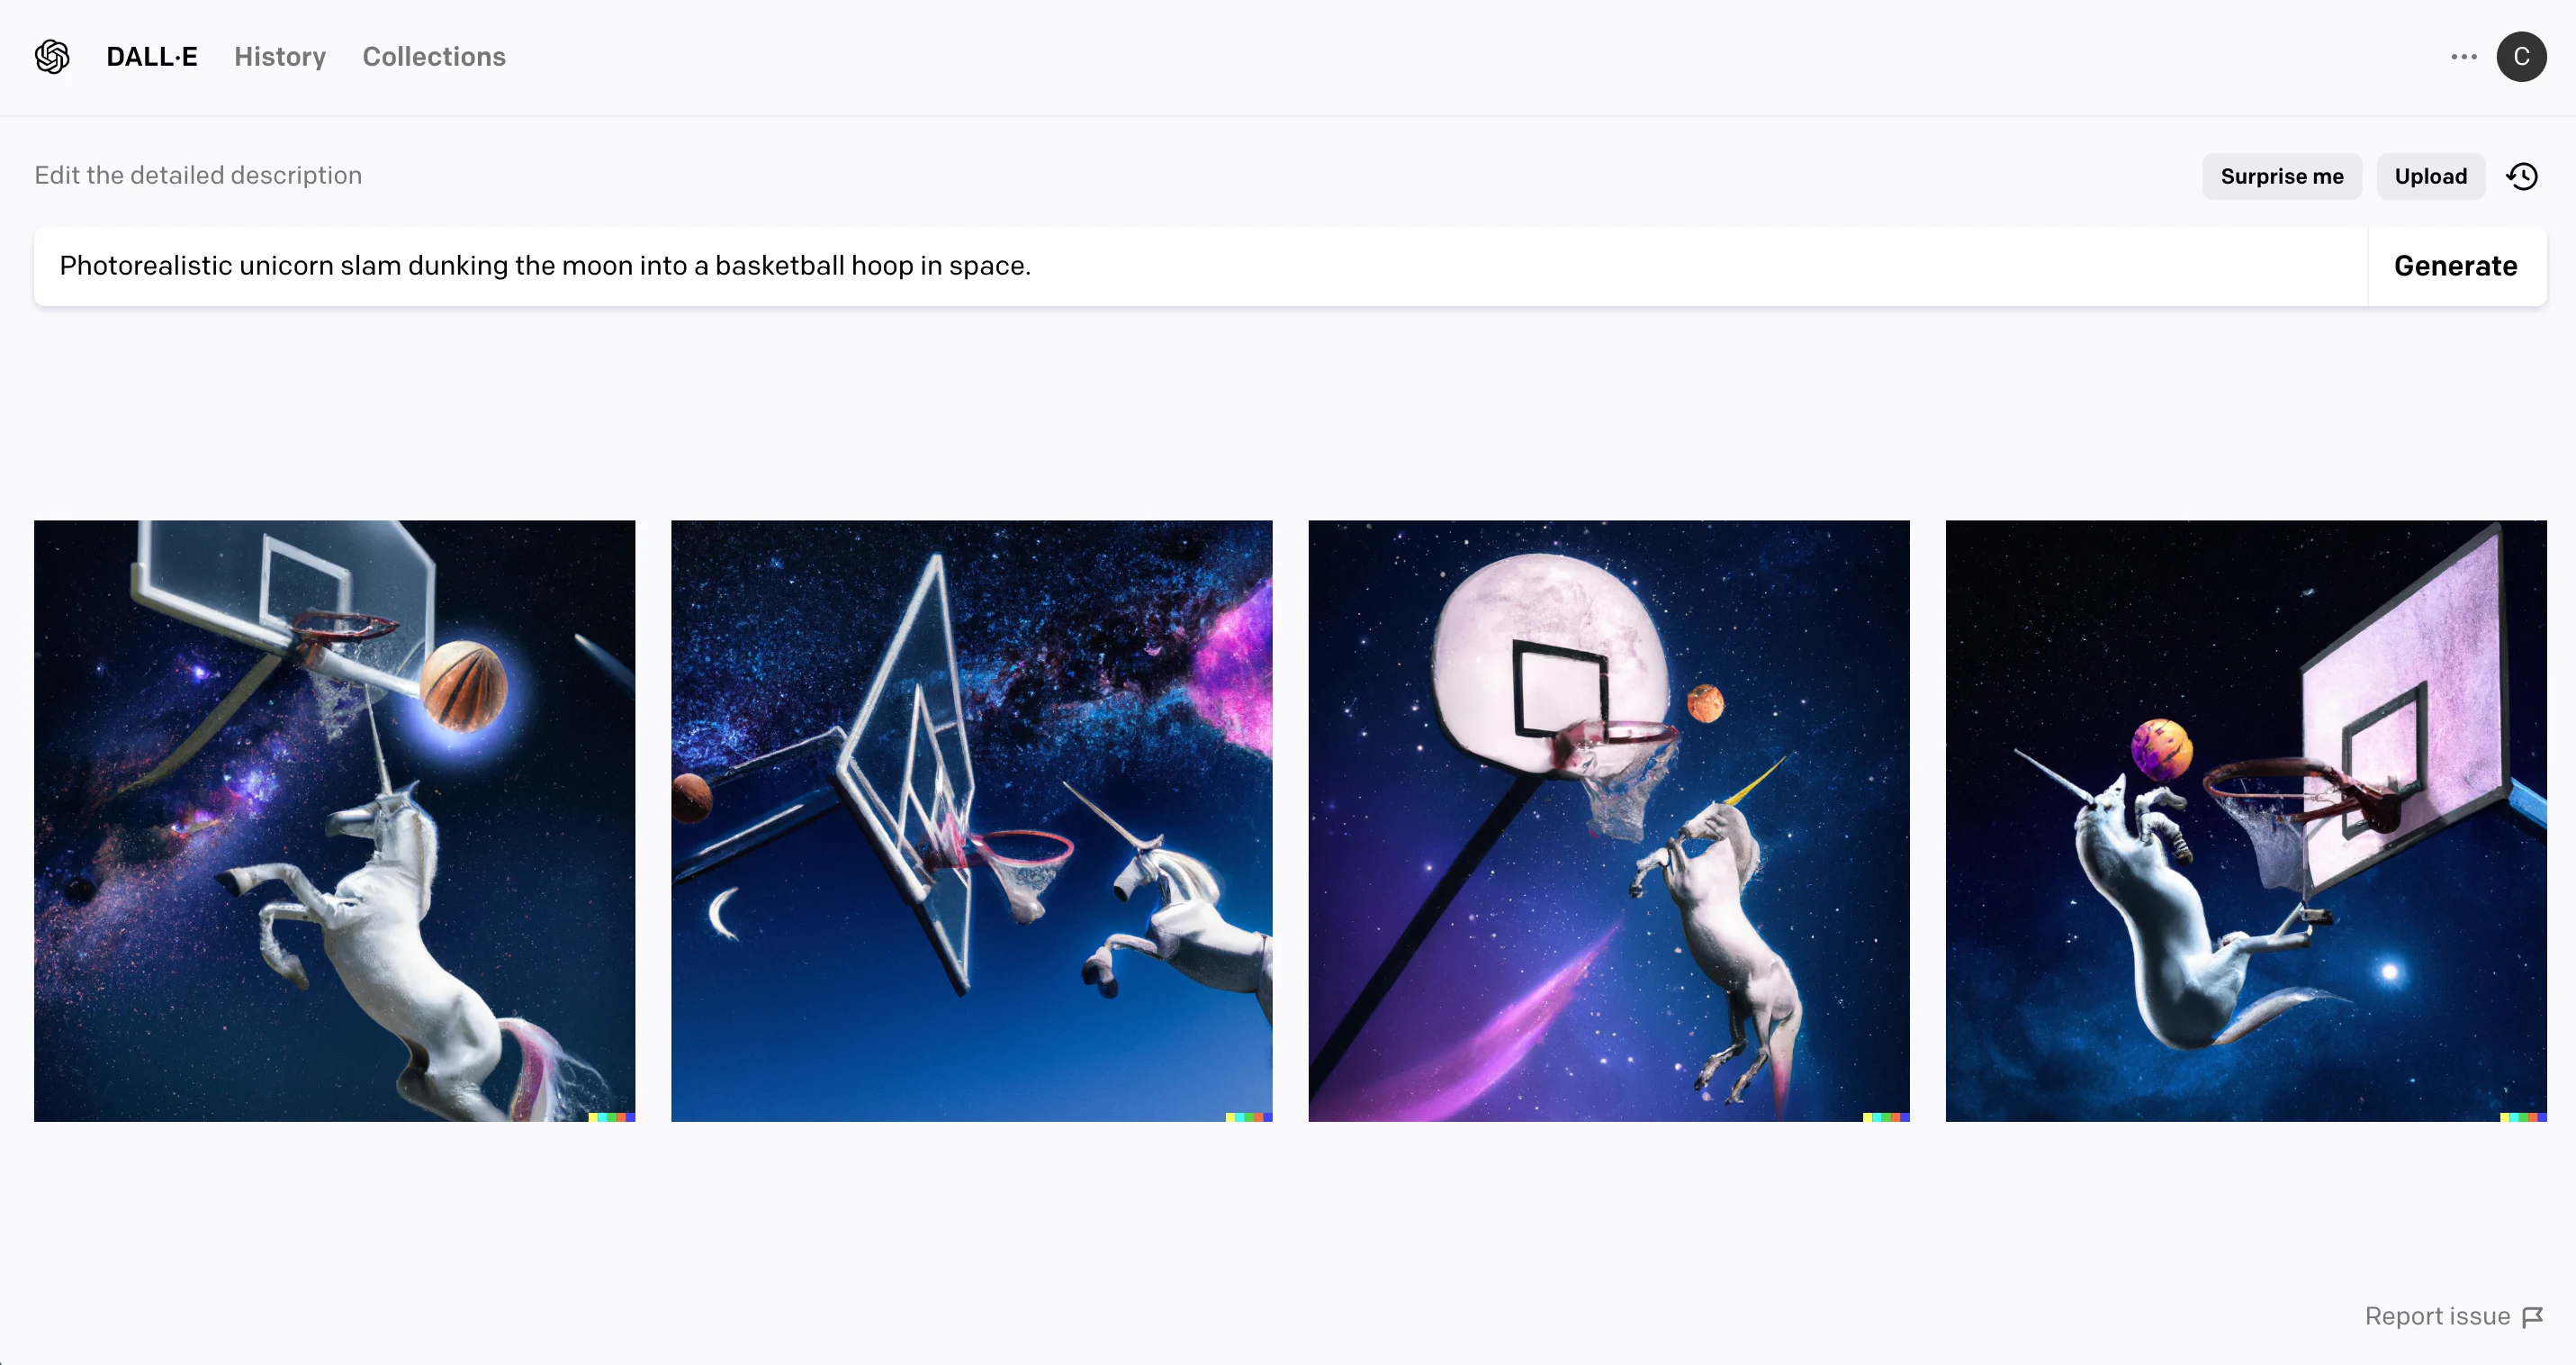 Screenshot - Dall-E 2 Example - Unicorn slam dunking a basketball in space - cuttingforbusiness.com.